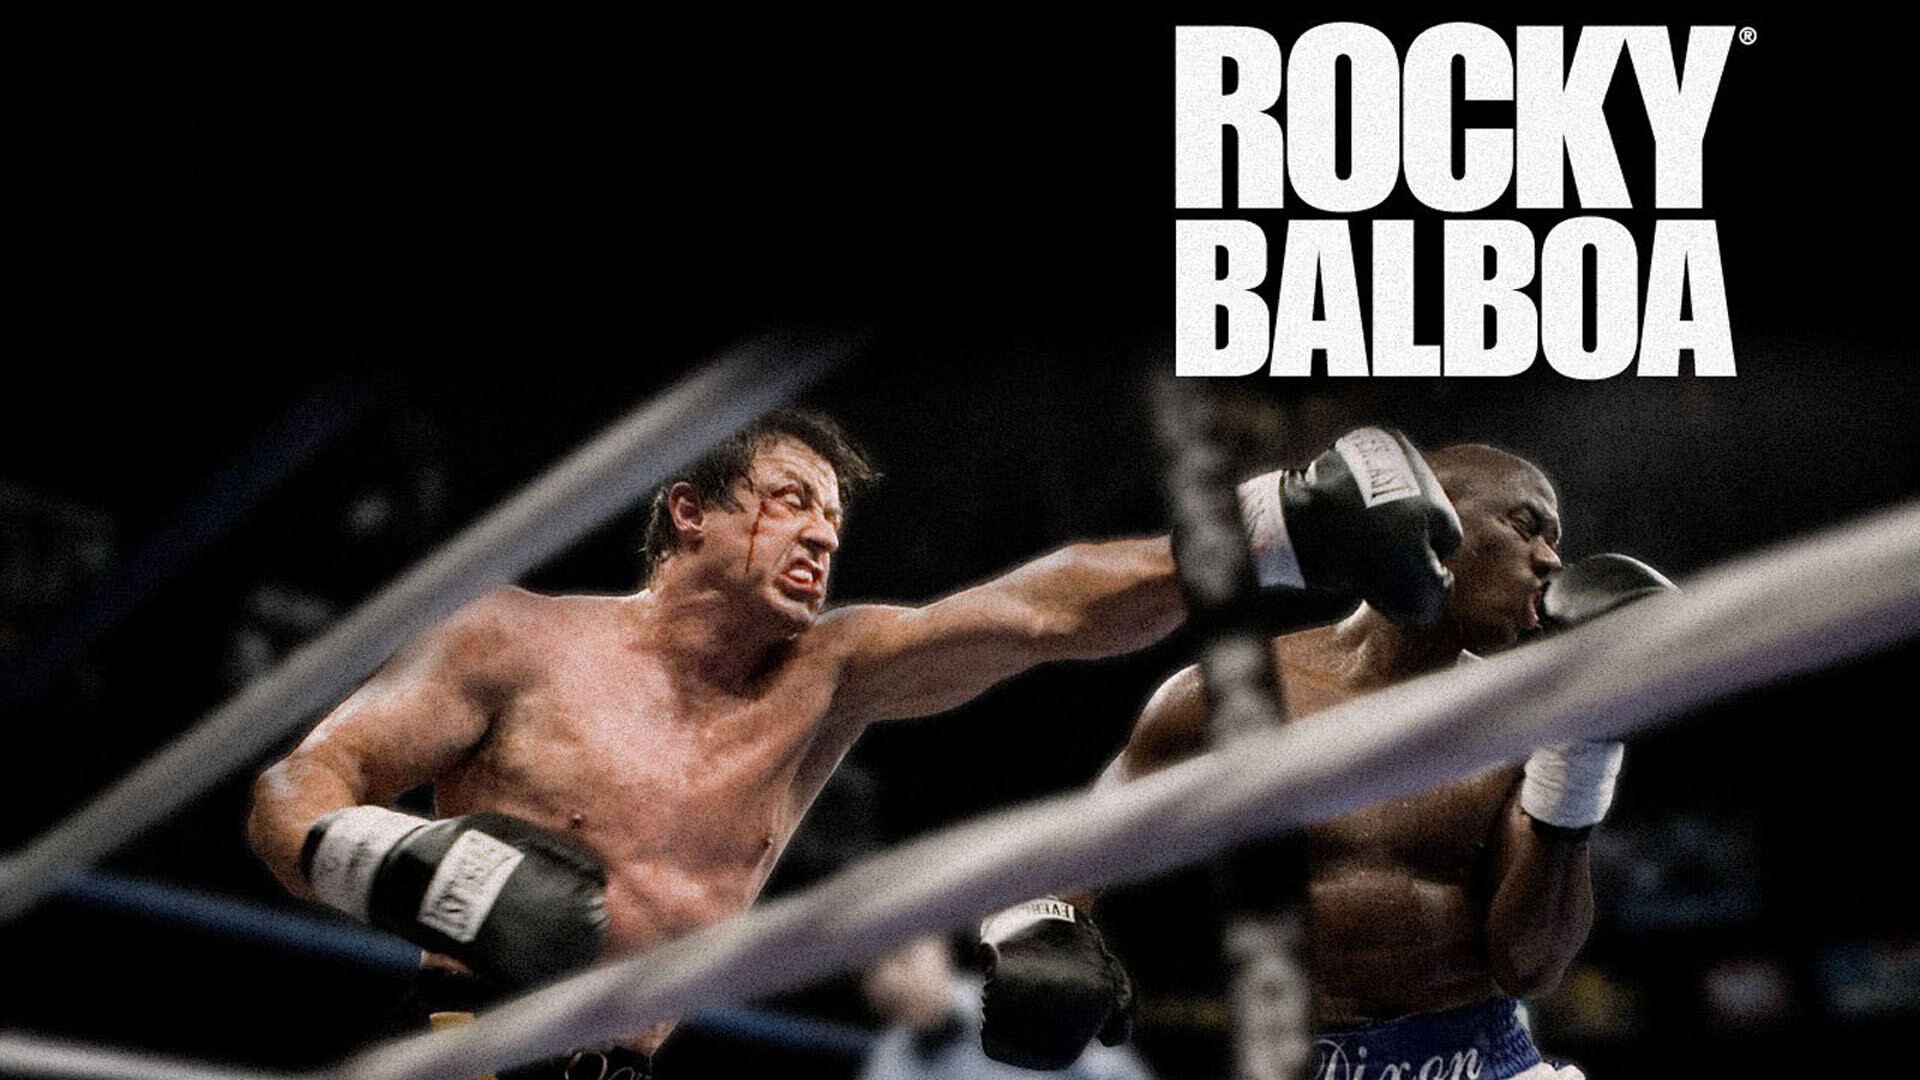 Rocky: Antonio Tarver as Mason "The Line" Dixon, Balboa's opponent. 1920x1080 Full HD Background.